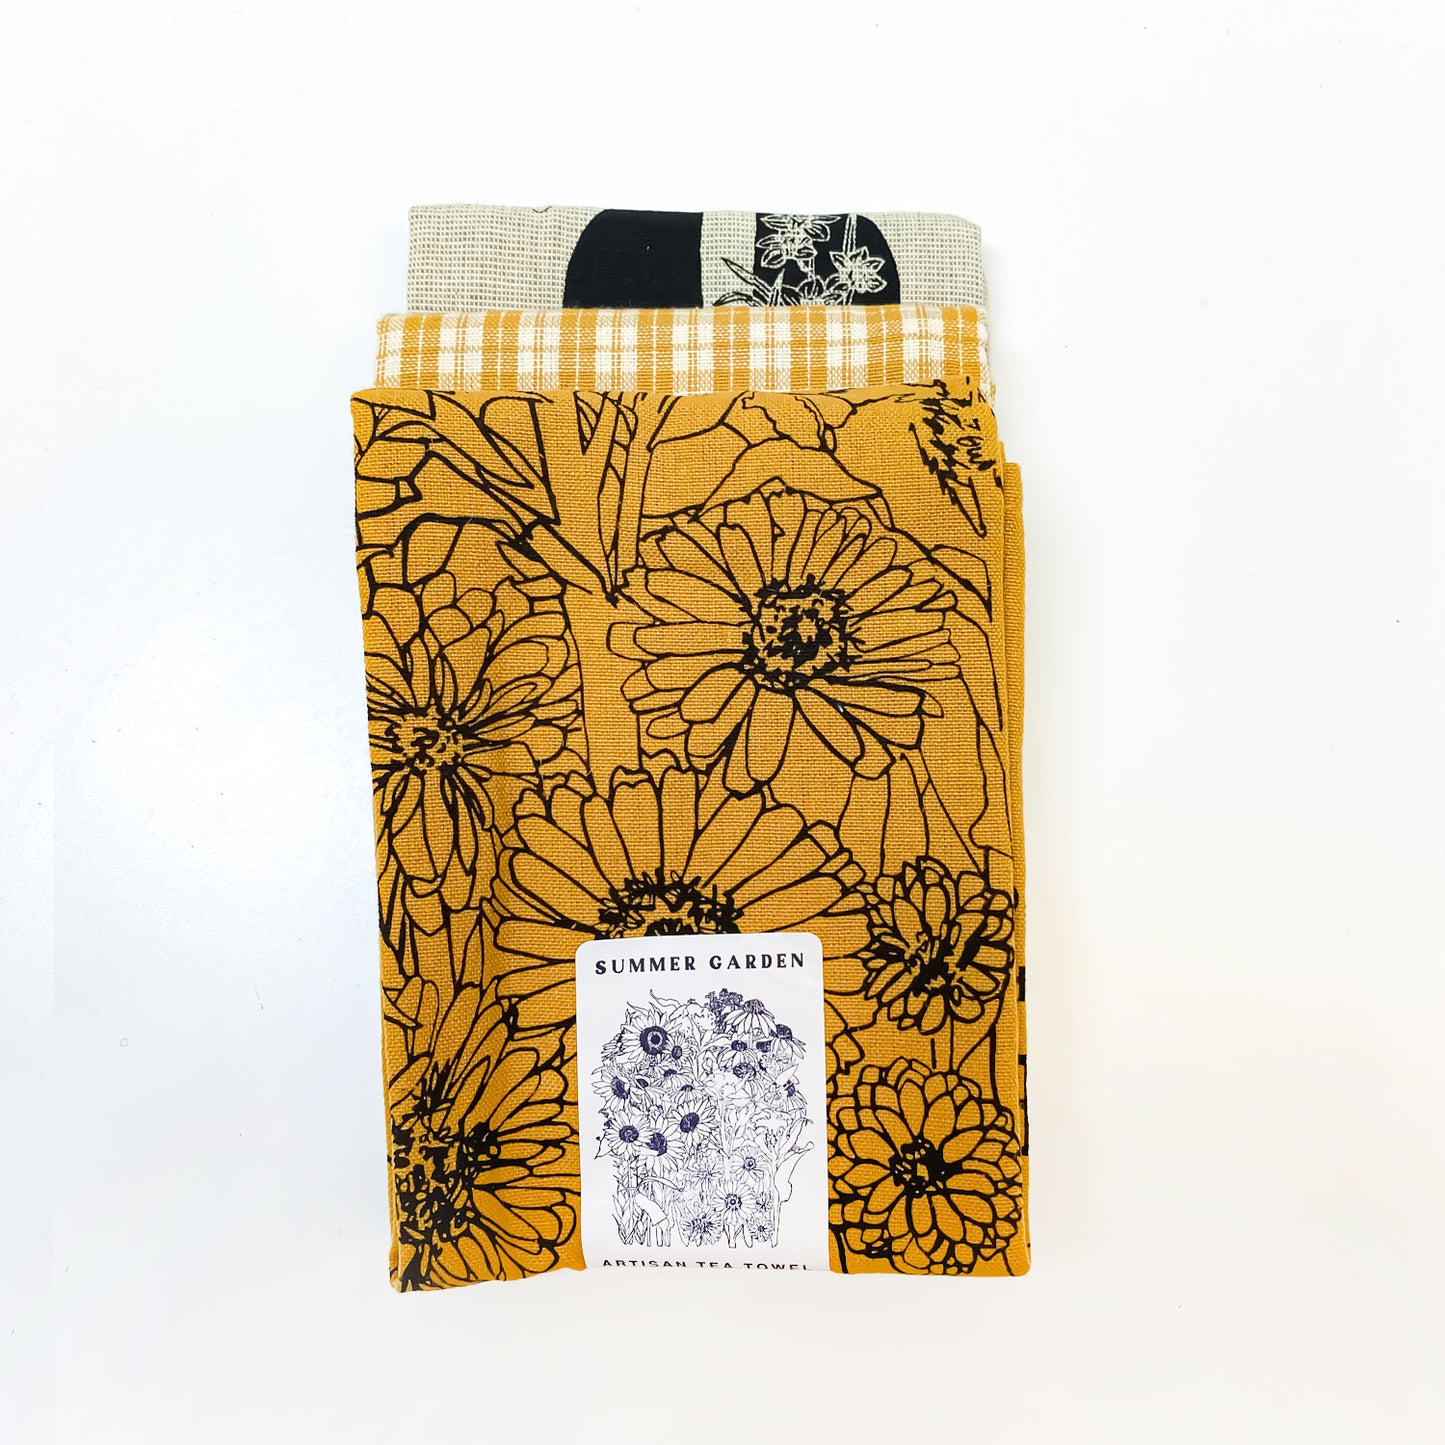 Summer Garden + ABC flowers Botanical Handprinted Artisan Tea Towel Set